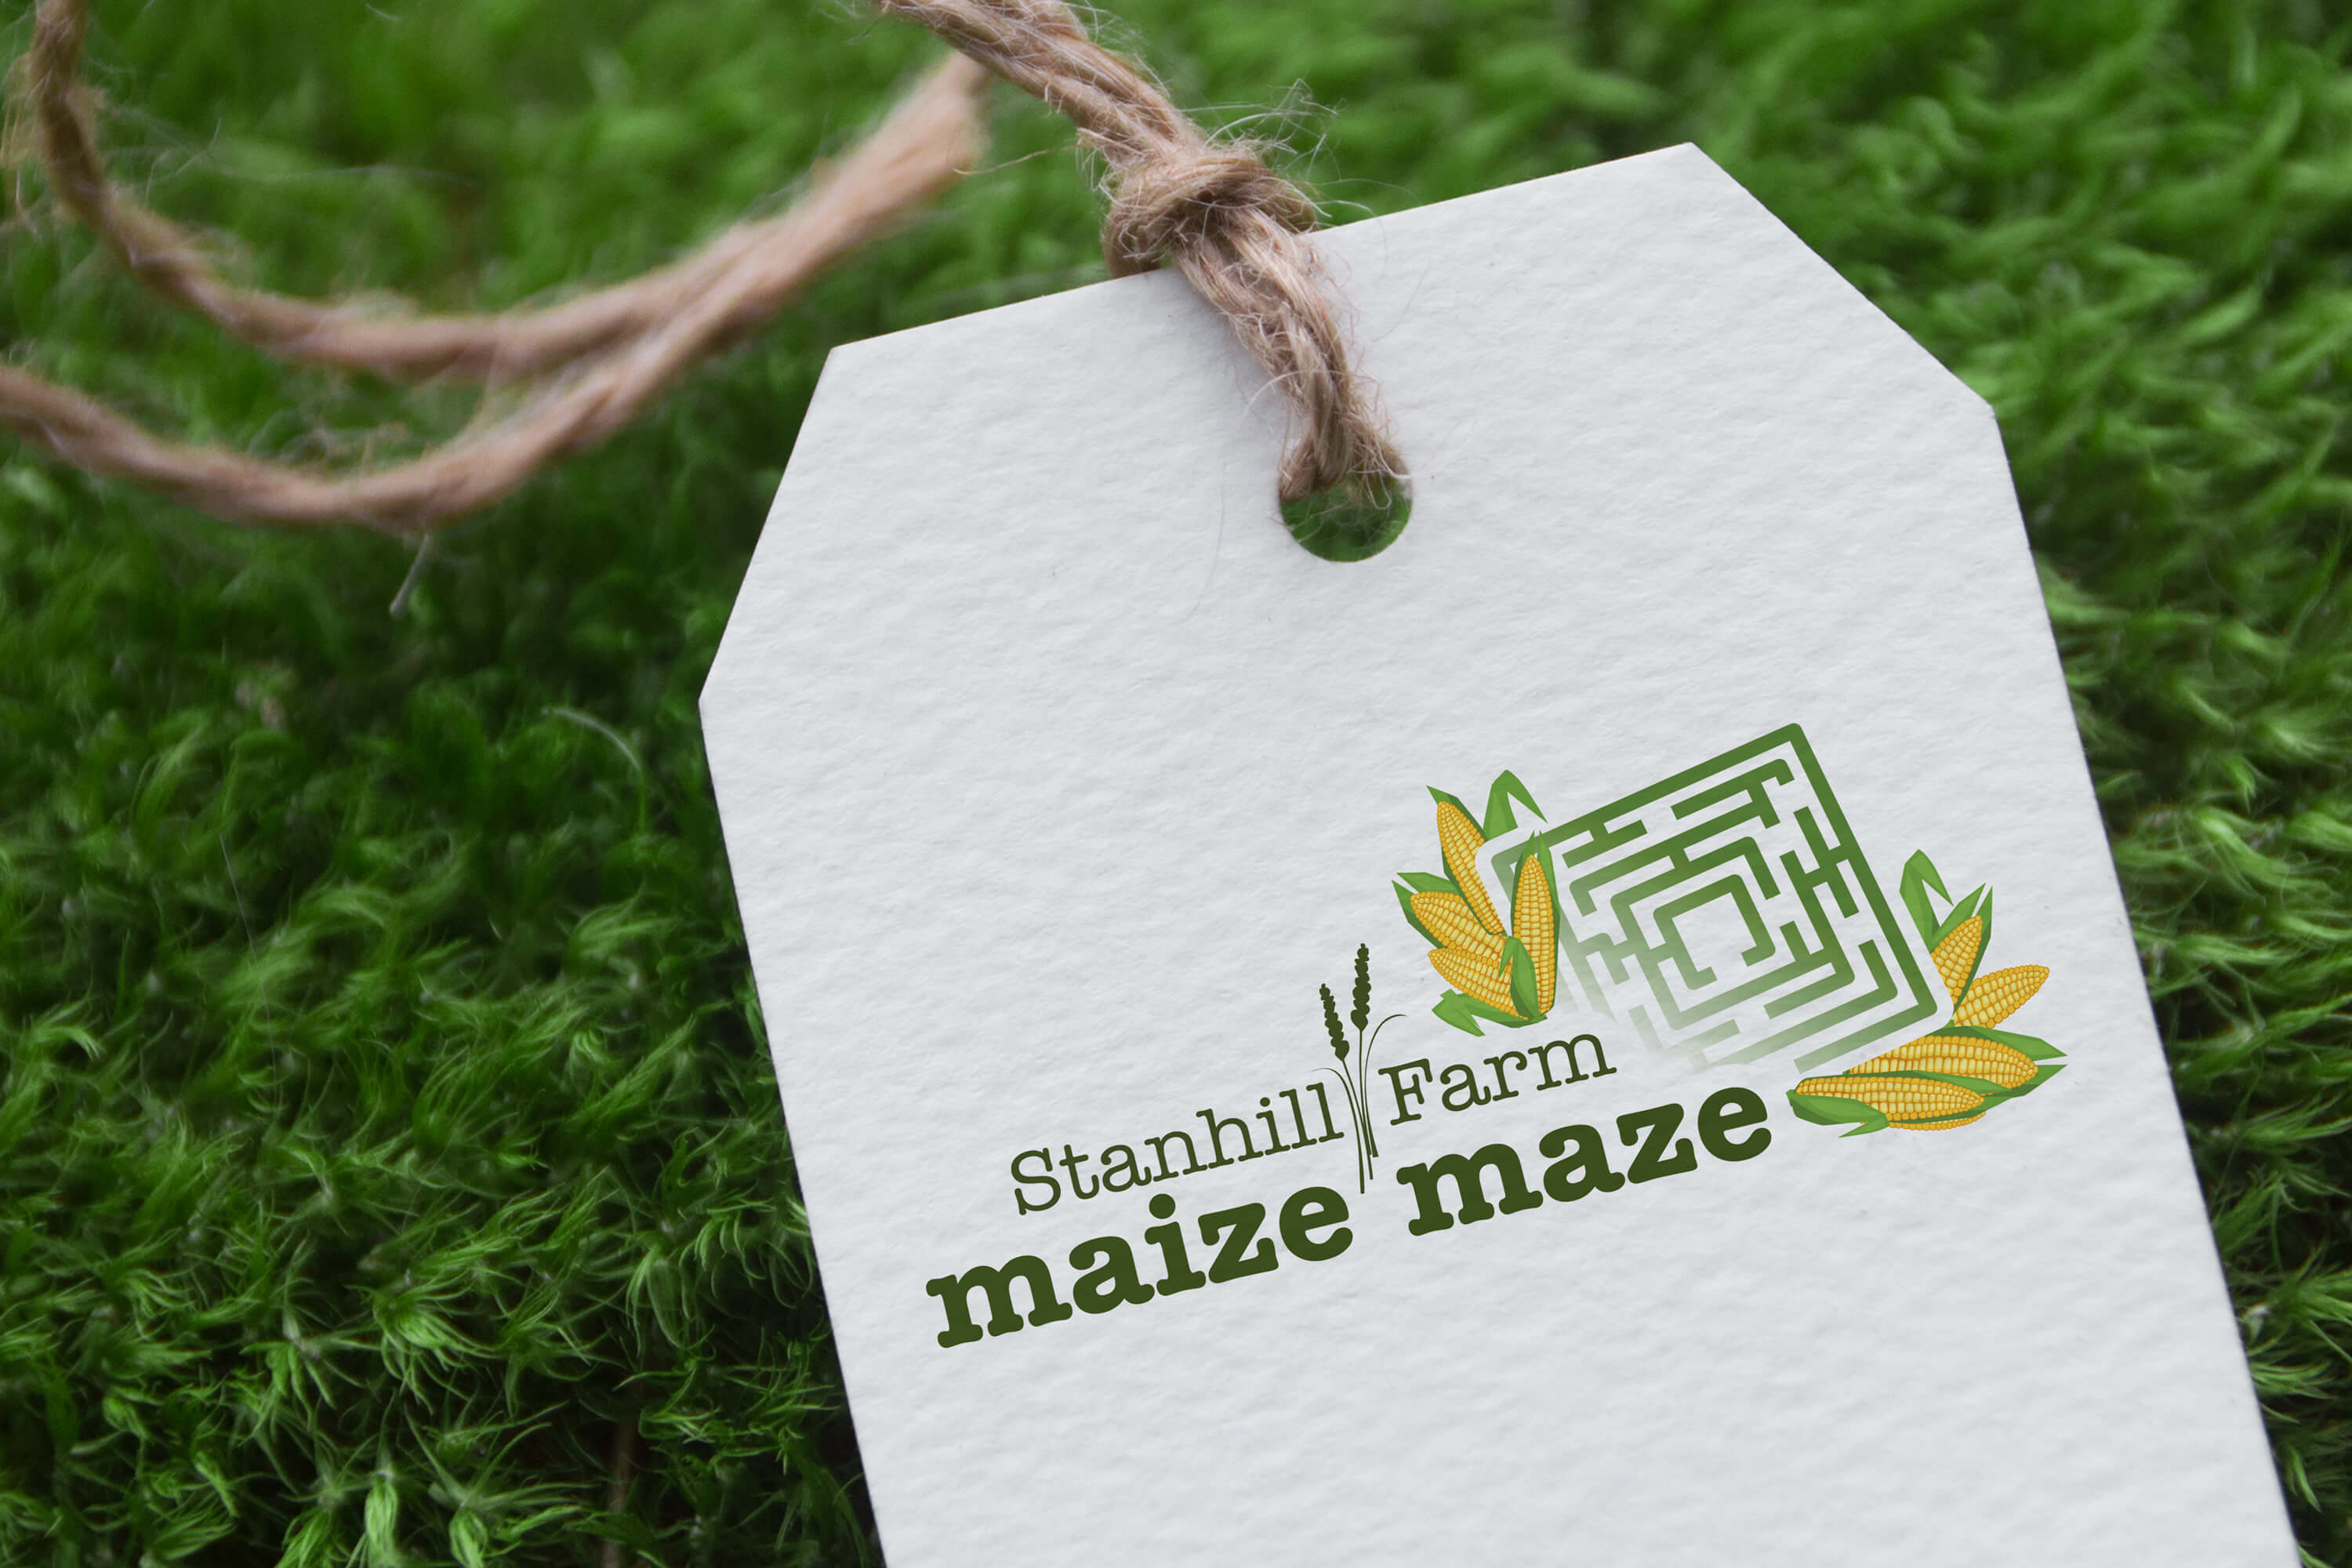 Paper tag showing the Stanhill Farm Maize Maze logo design